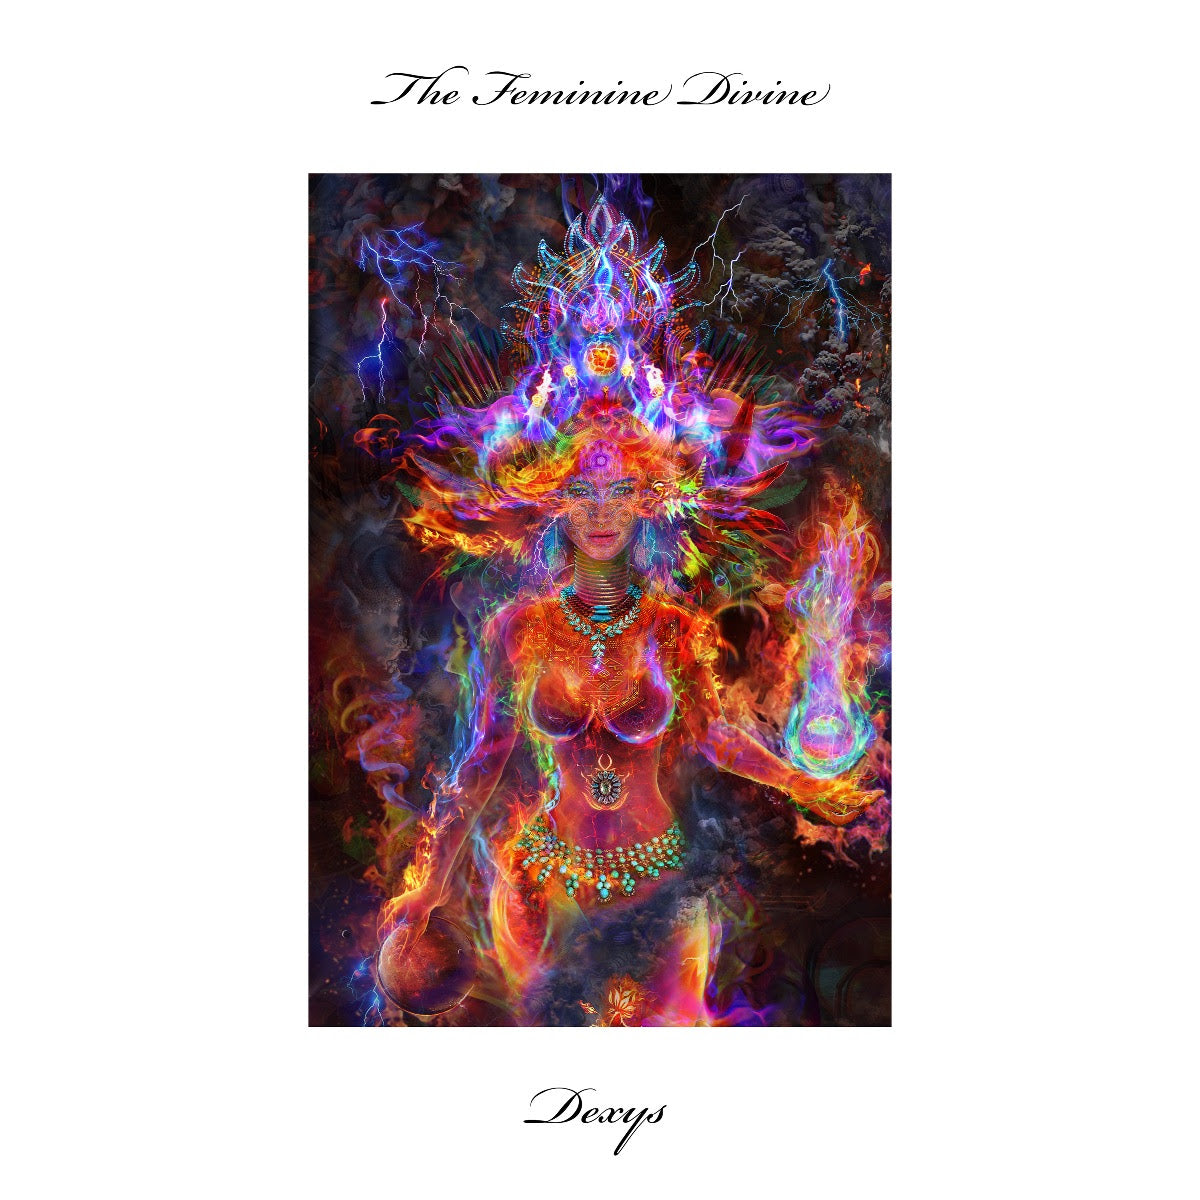 Dexys - The Feminine Divine (Purple Vinyl)